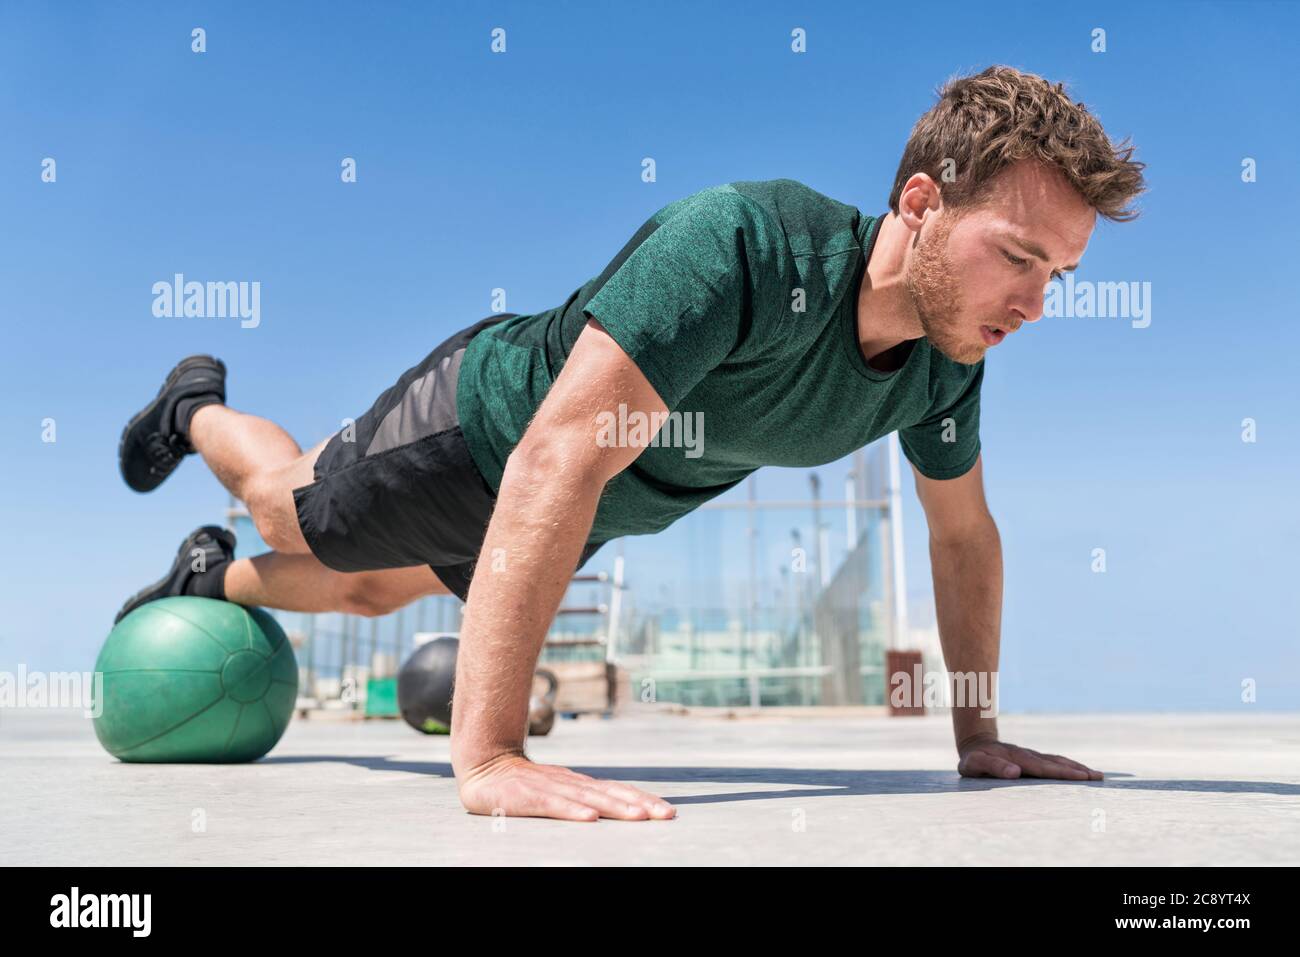 Man doing pushups balancing on medicine ball Stock Photo